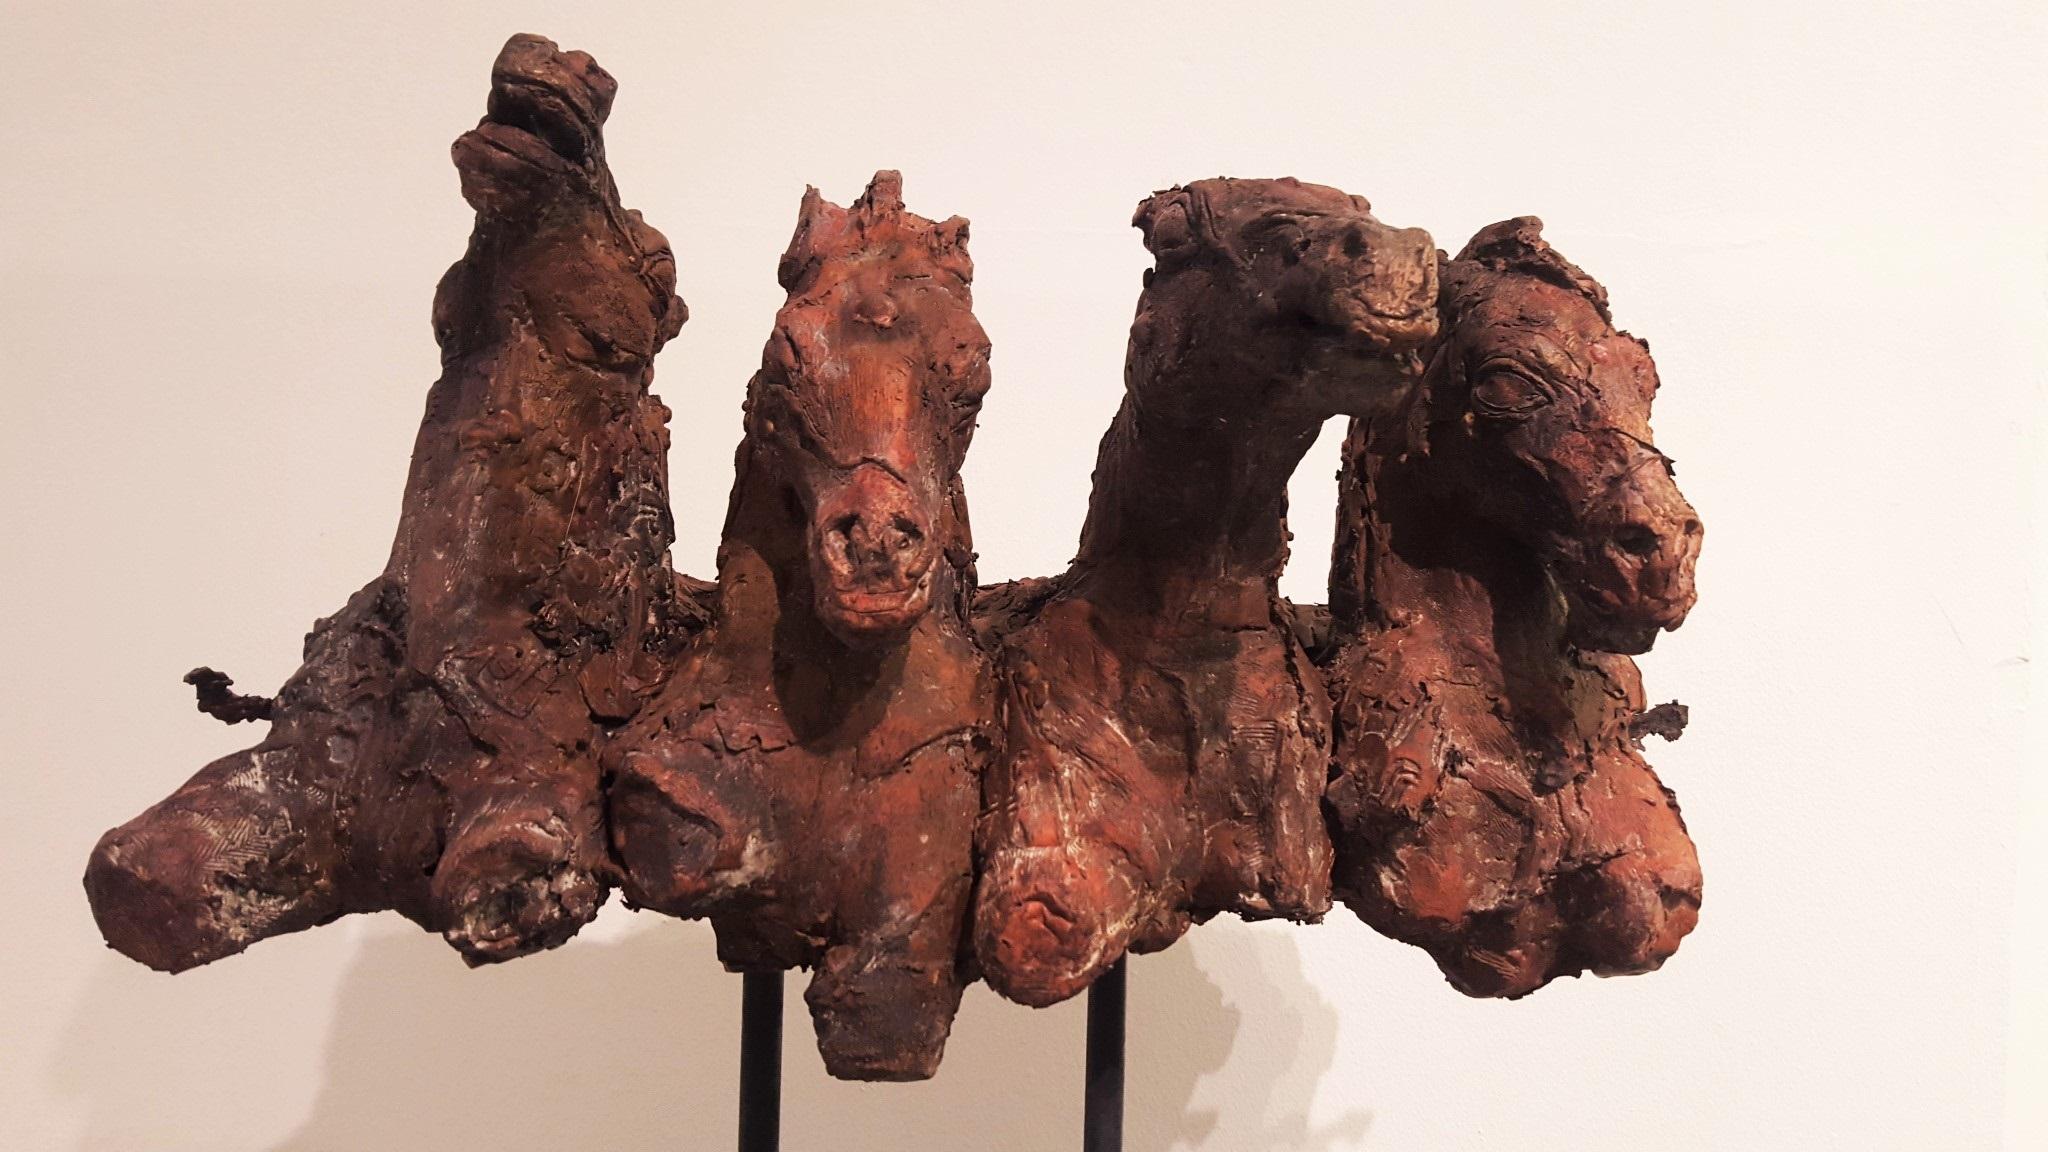 Gerti Bierenbroodspot Figurative Sculpture - Battle Of Kadesh Bronze Sculpture Horses Neo Classic Contemporary In Stock